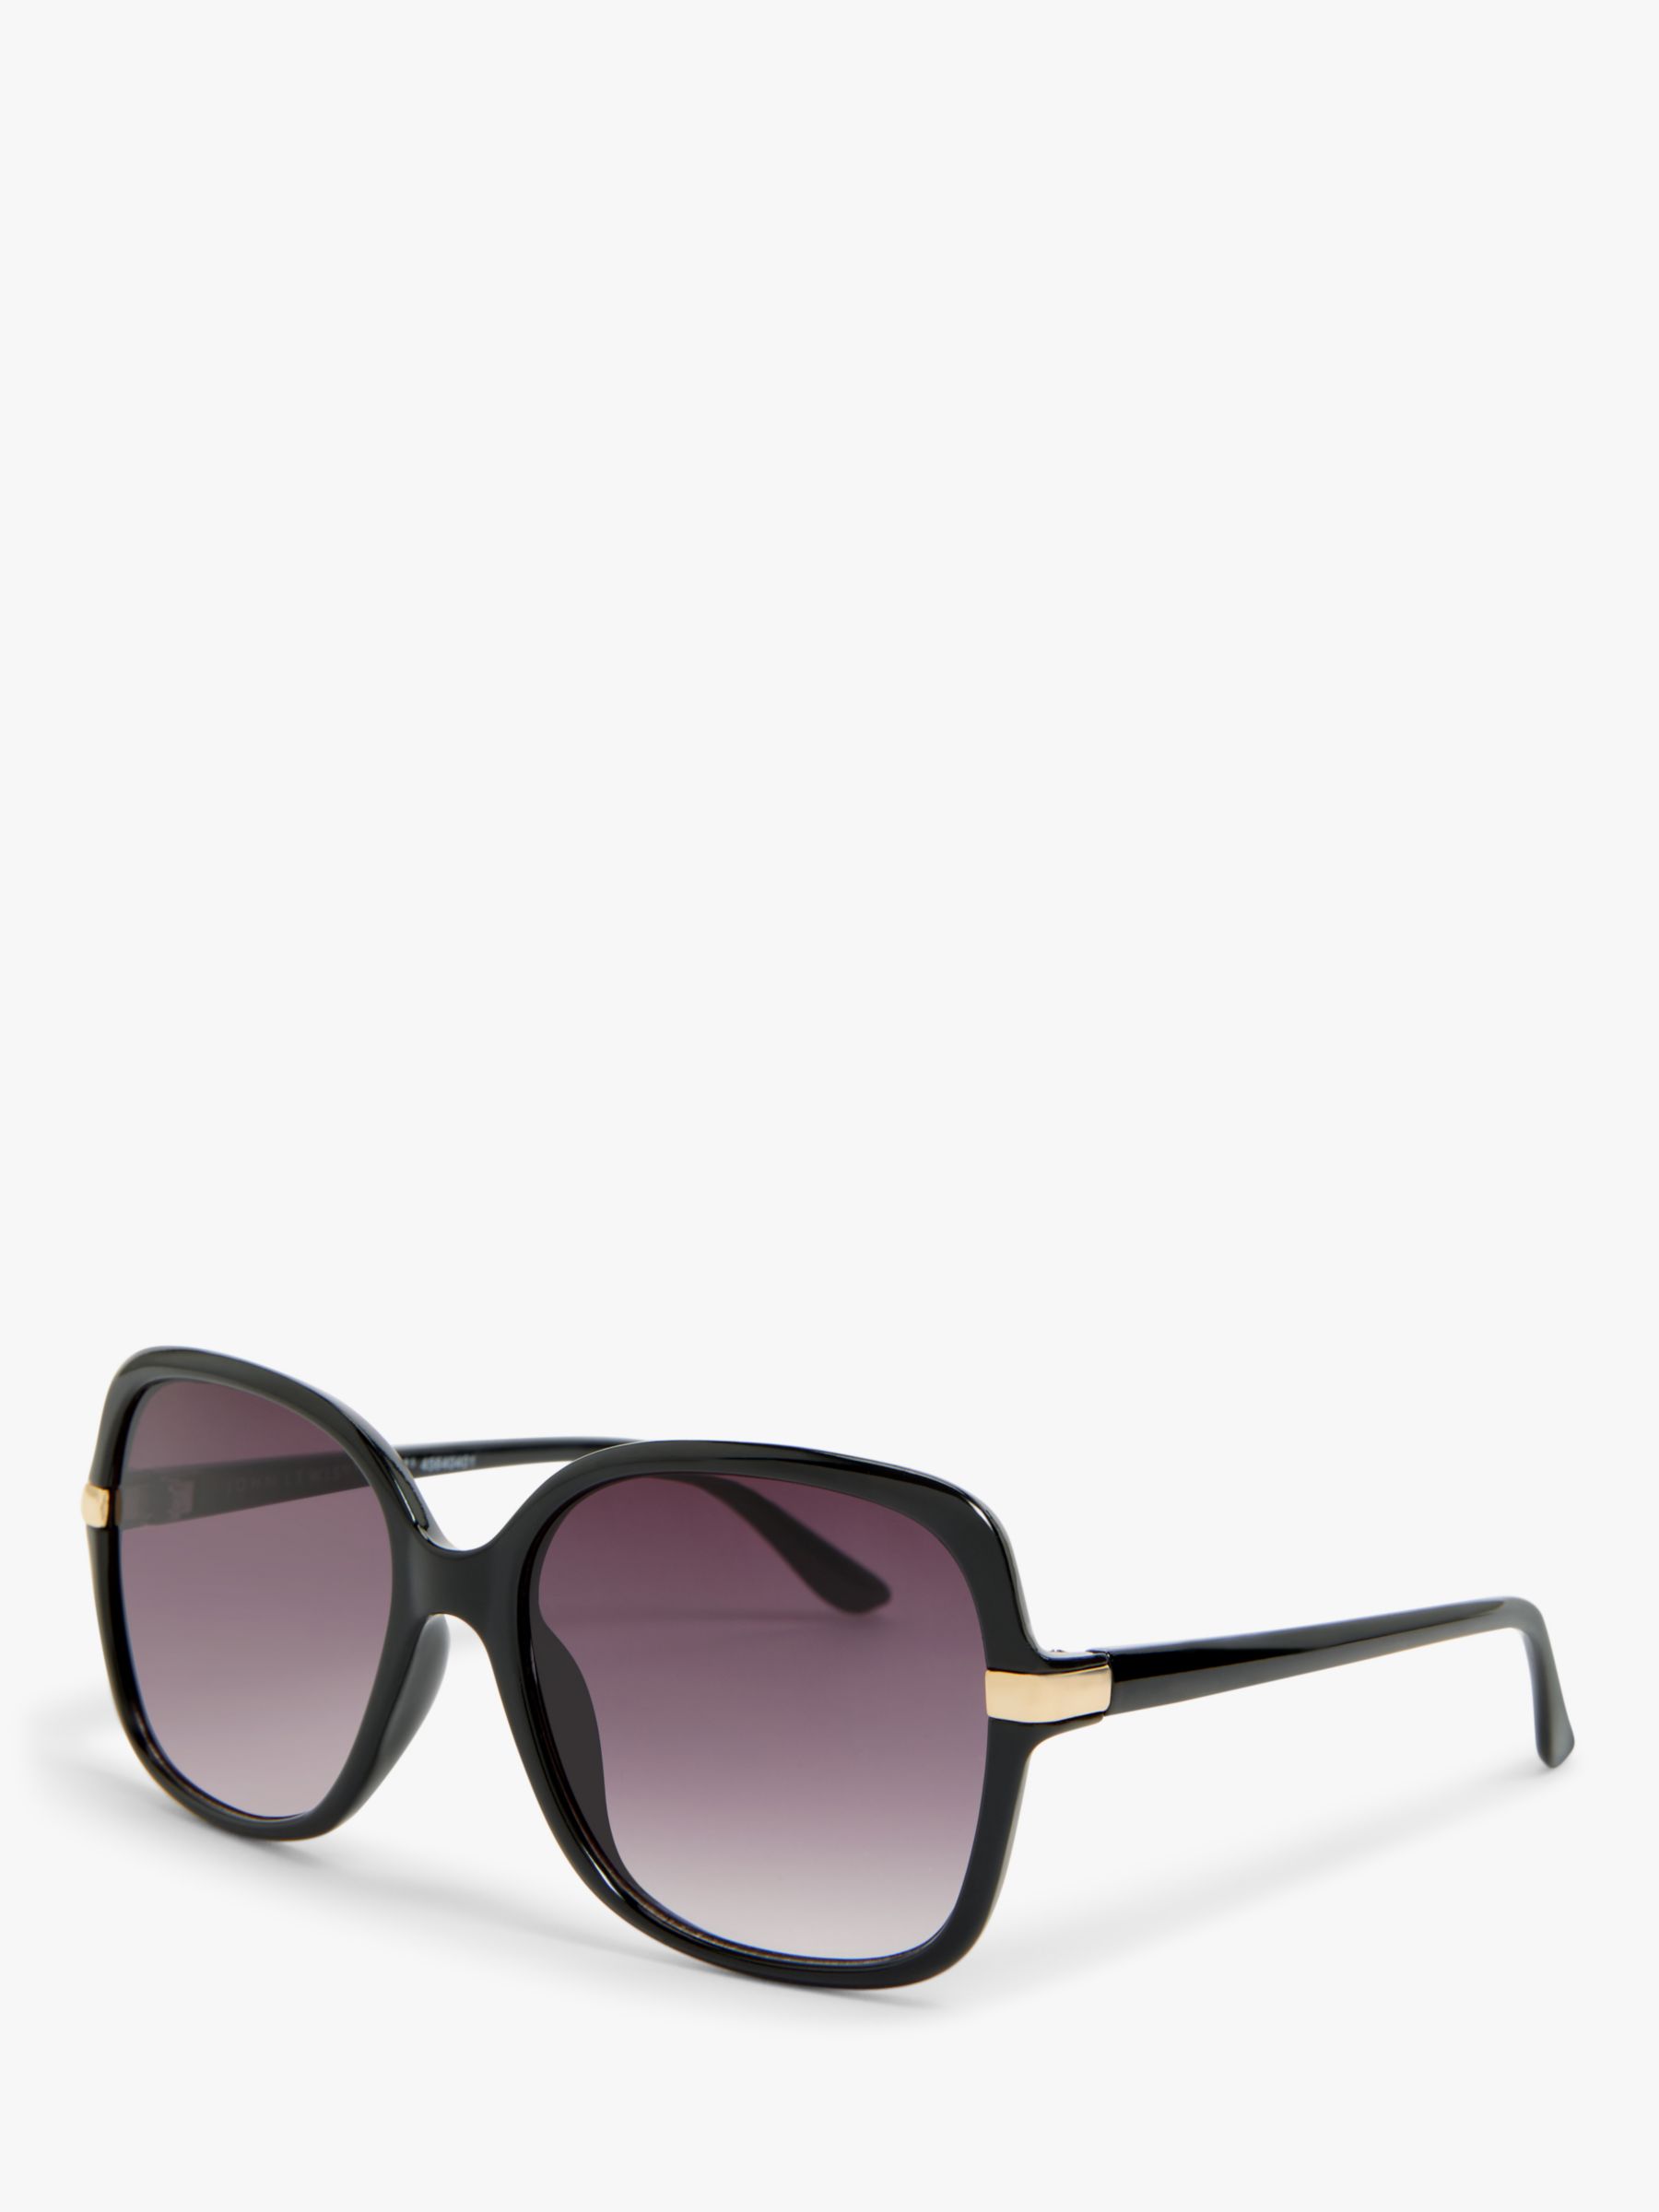 John Lewis Women's Square Sunglasses, Black/Purple Gradient